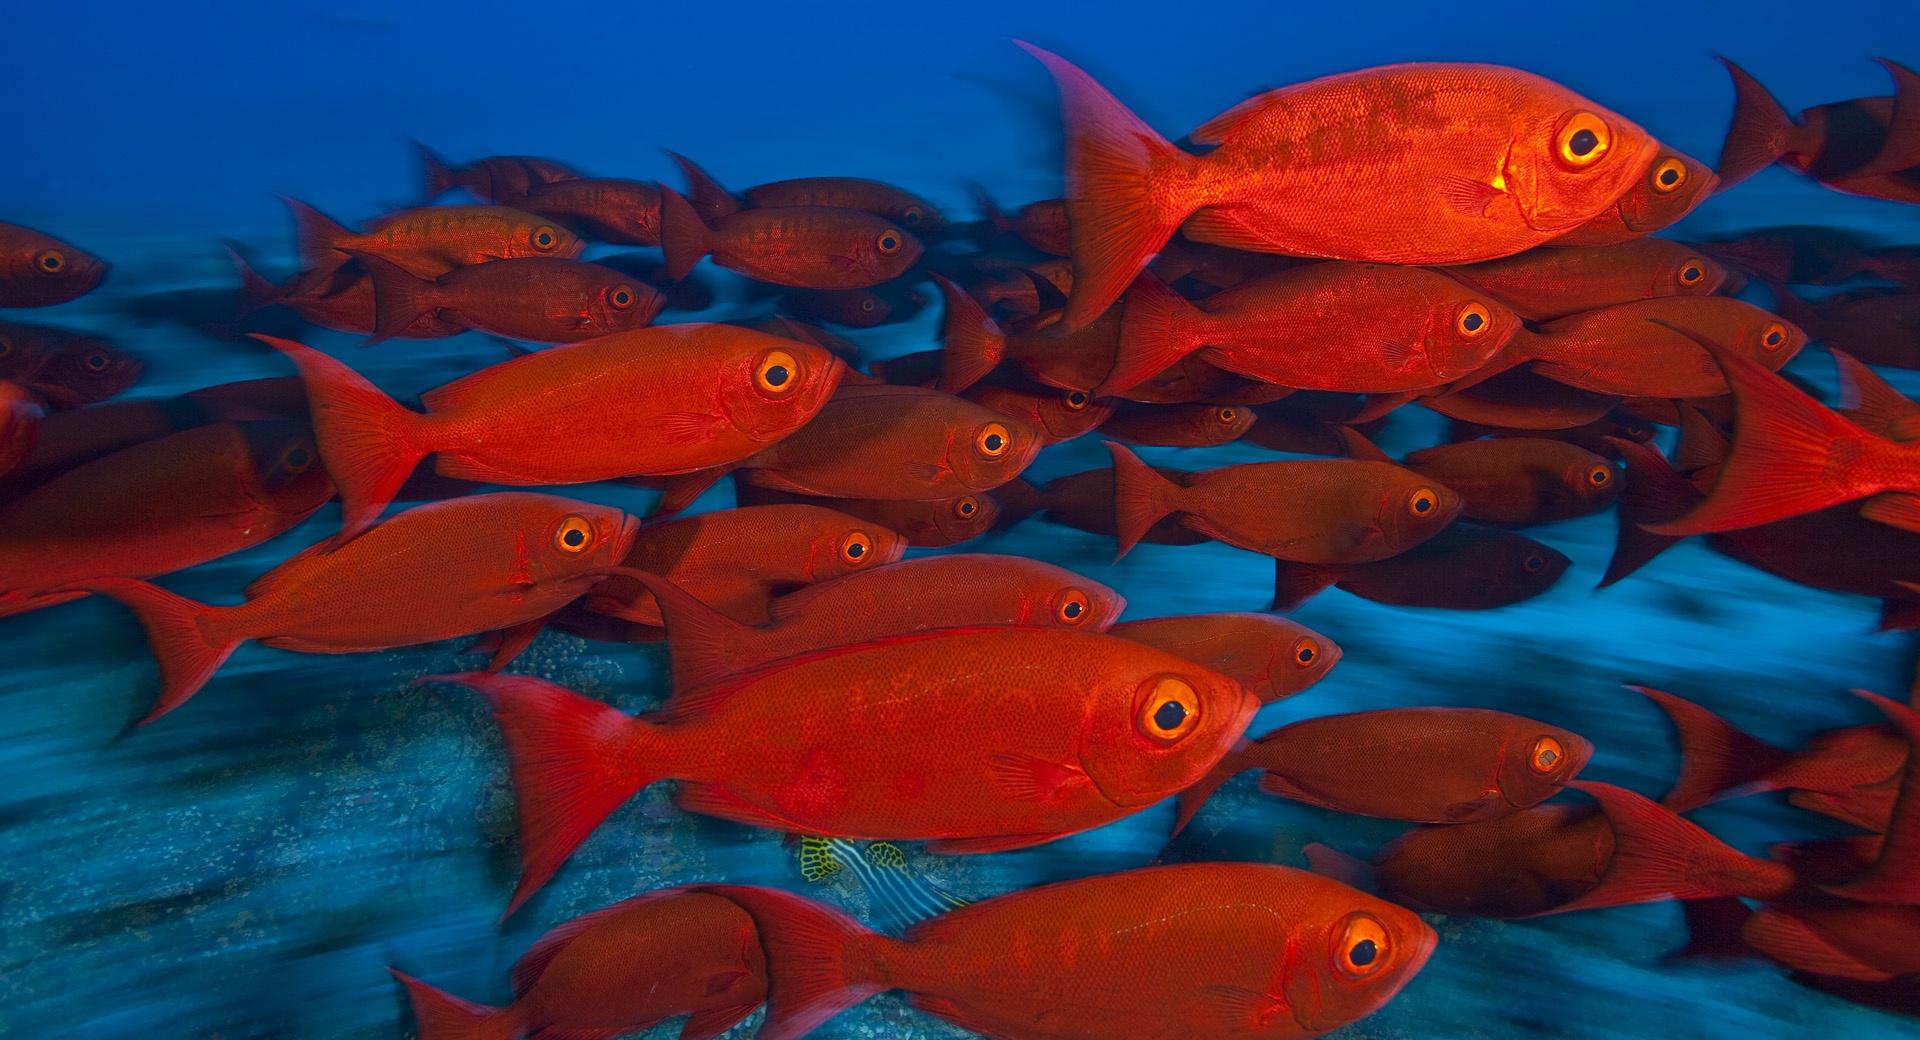 School Of Fish, Maldives at 1024 x 1024 iPad size wallpapers HD quality